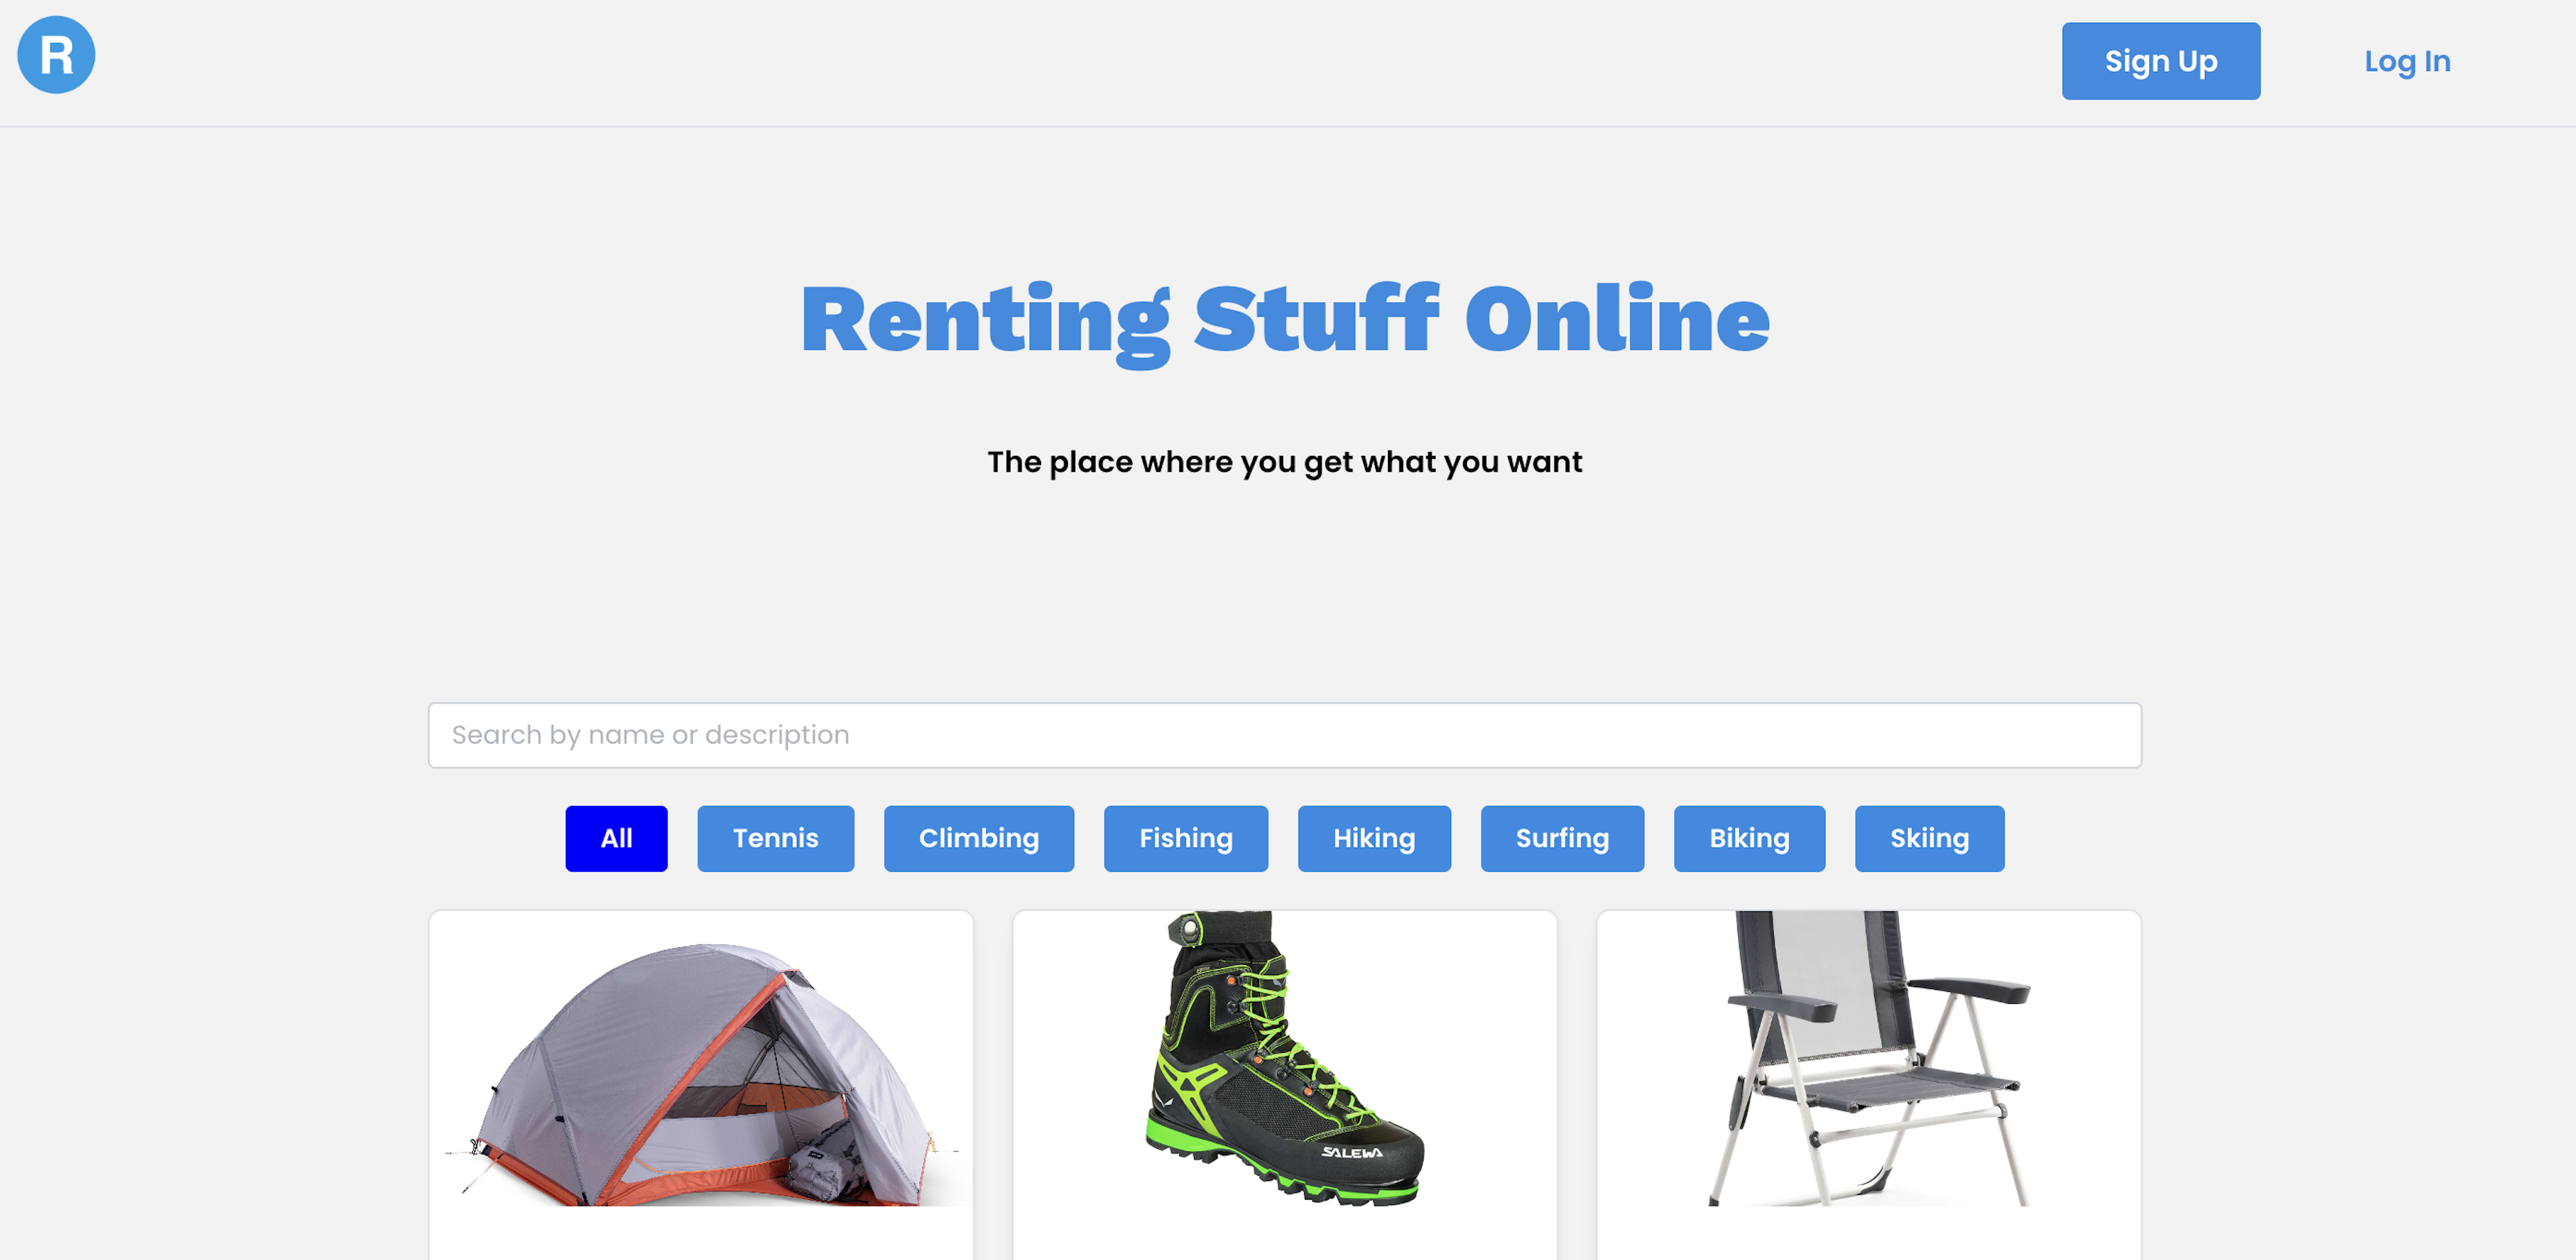 Renting Stuff Online